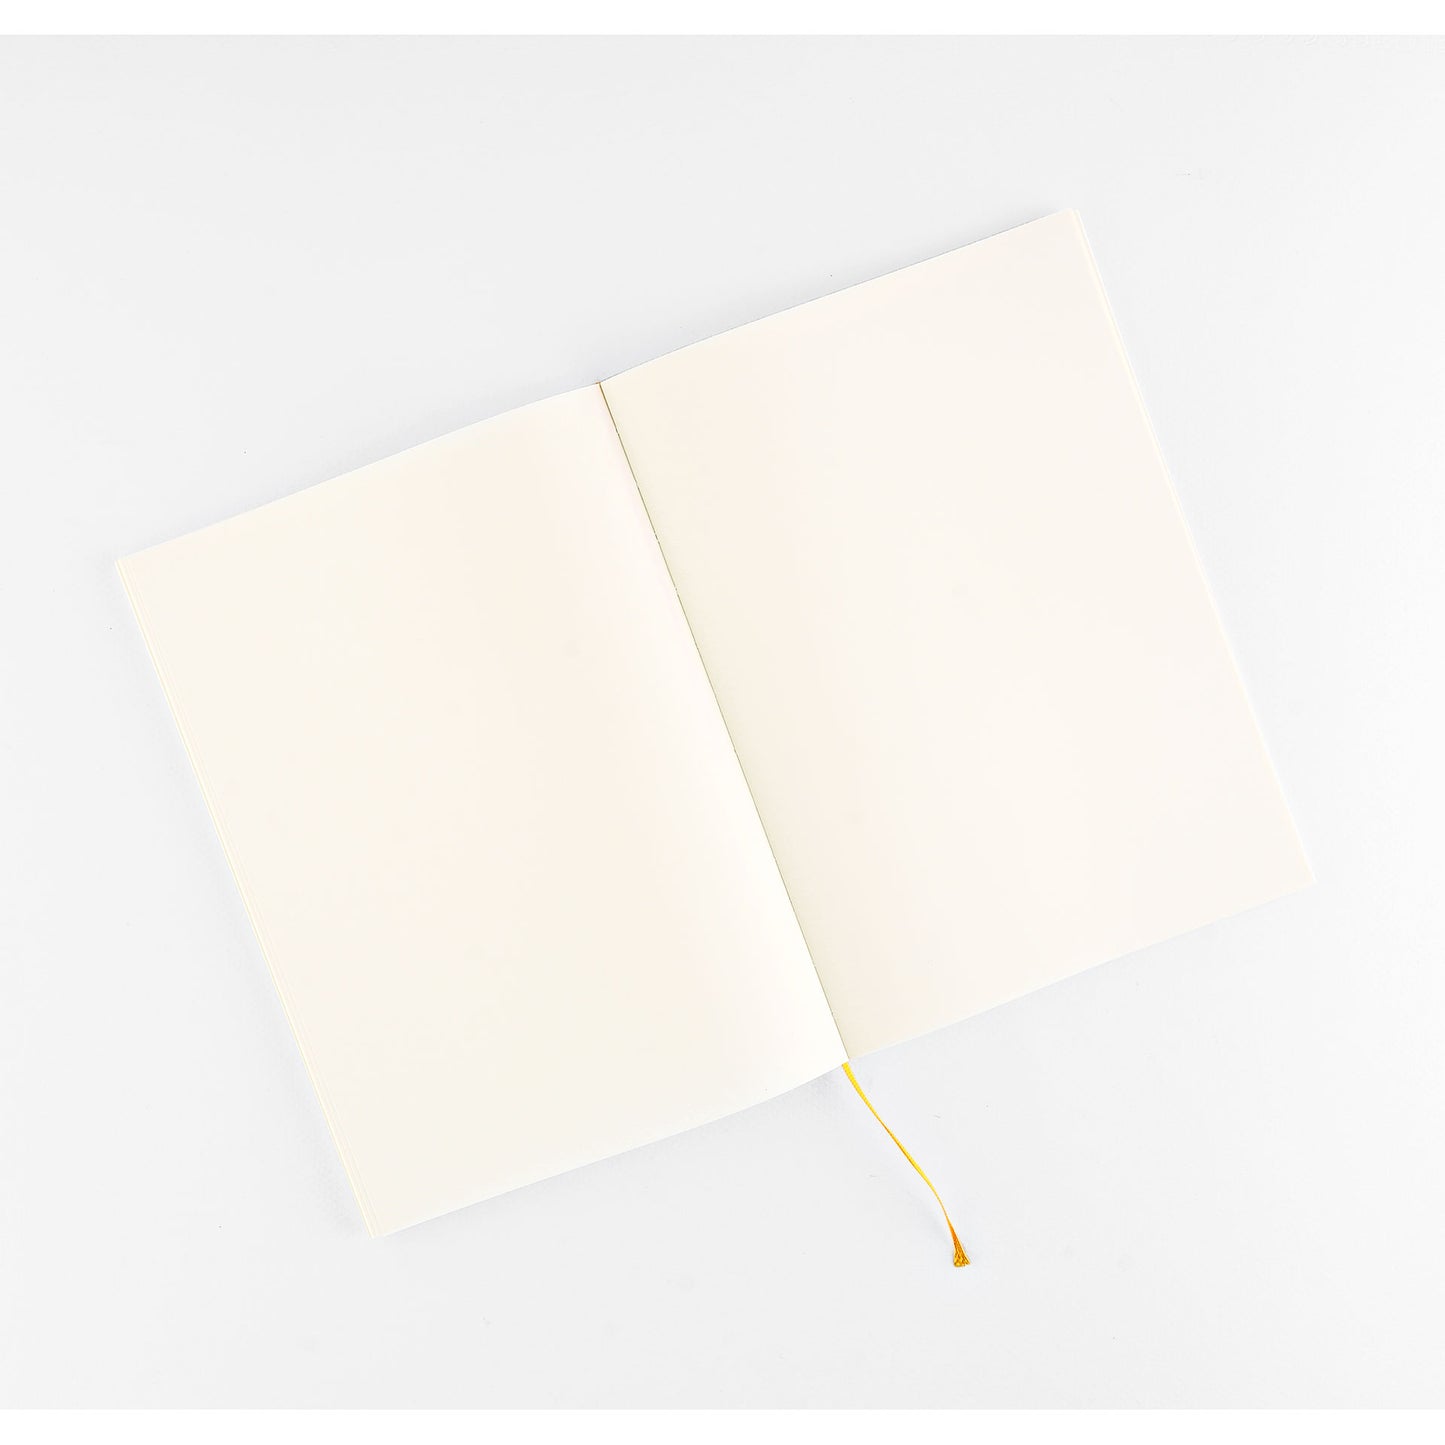 Midori MD Notebook - A6 - Blank